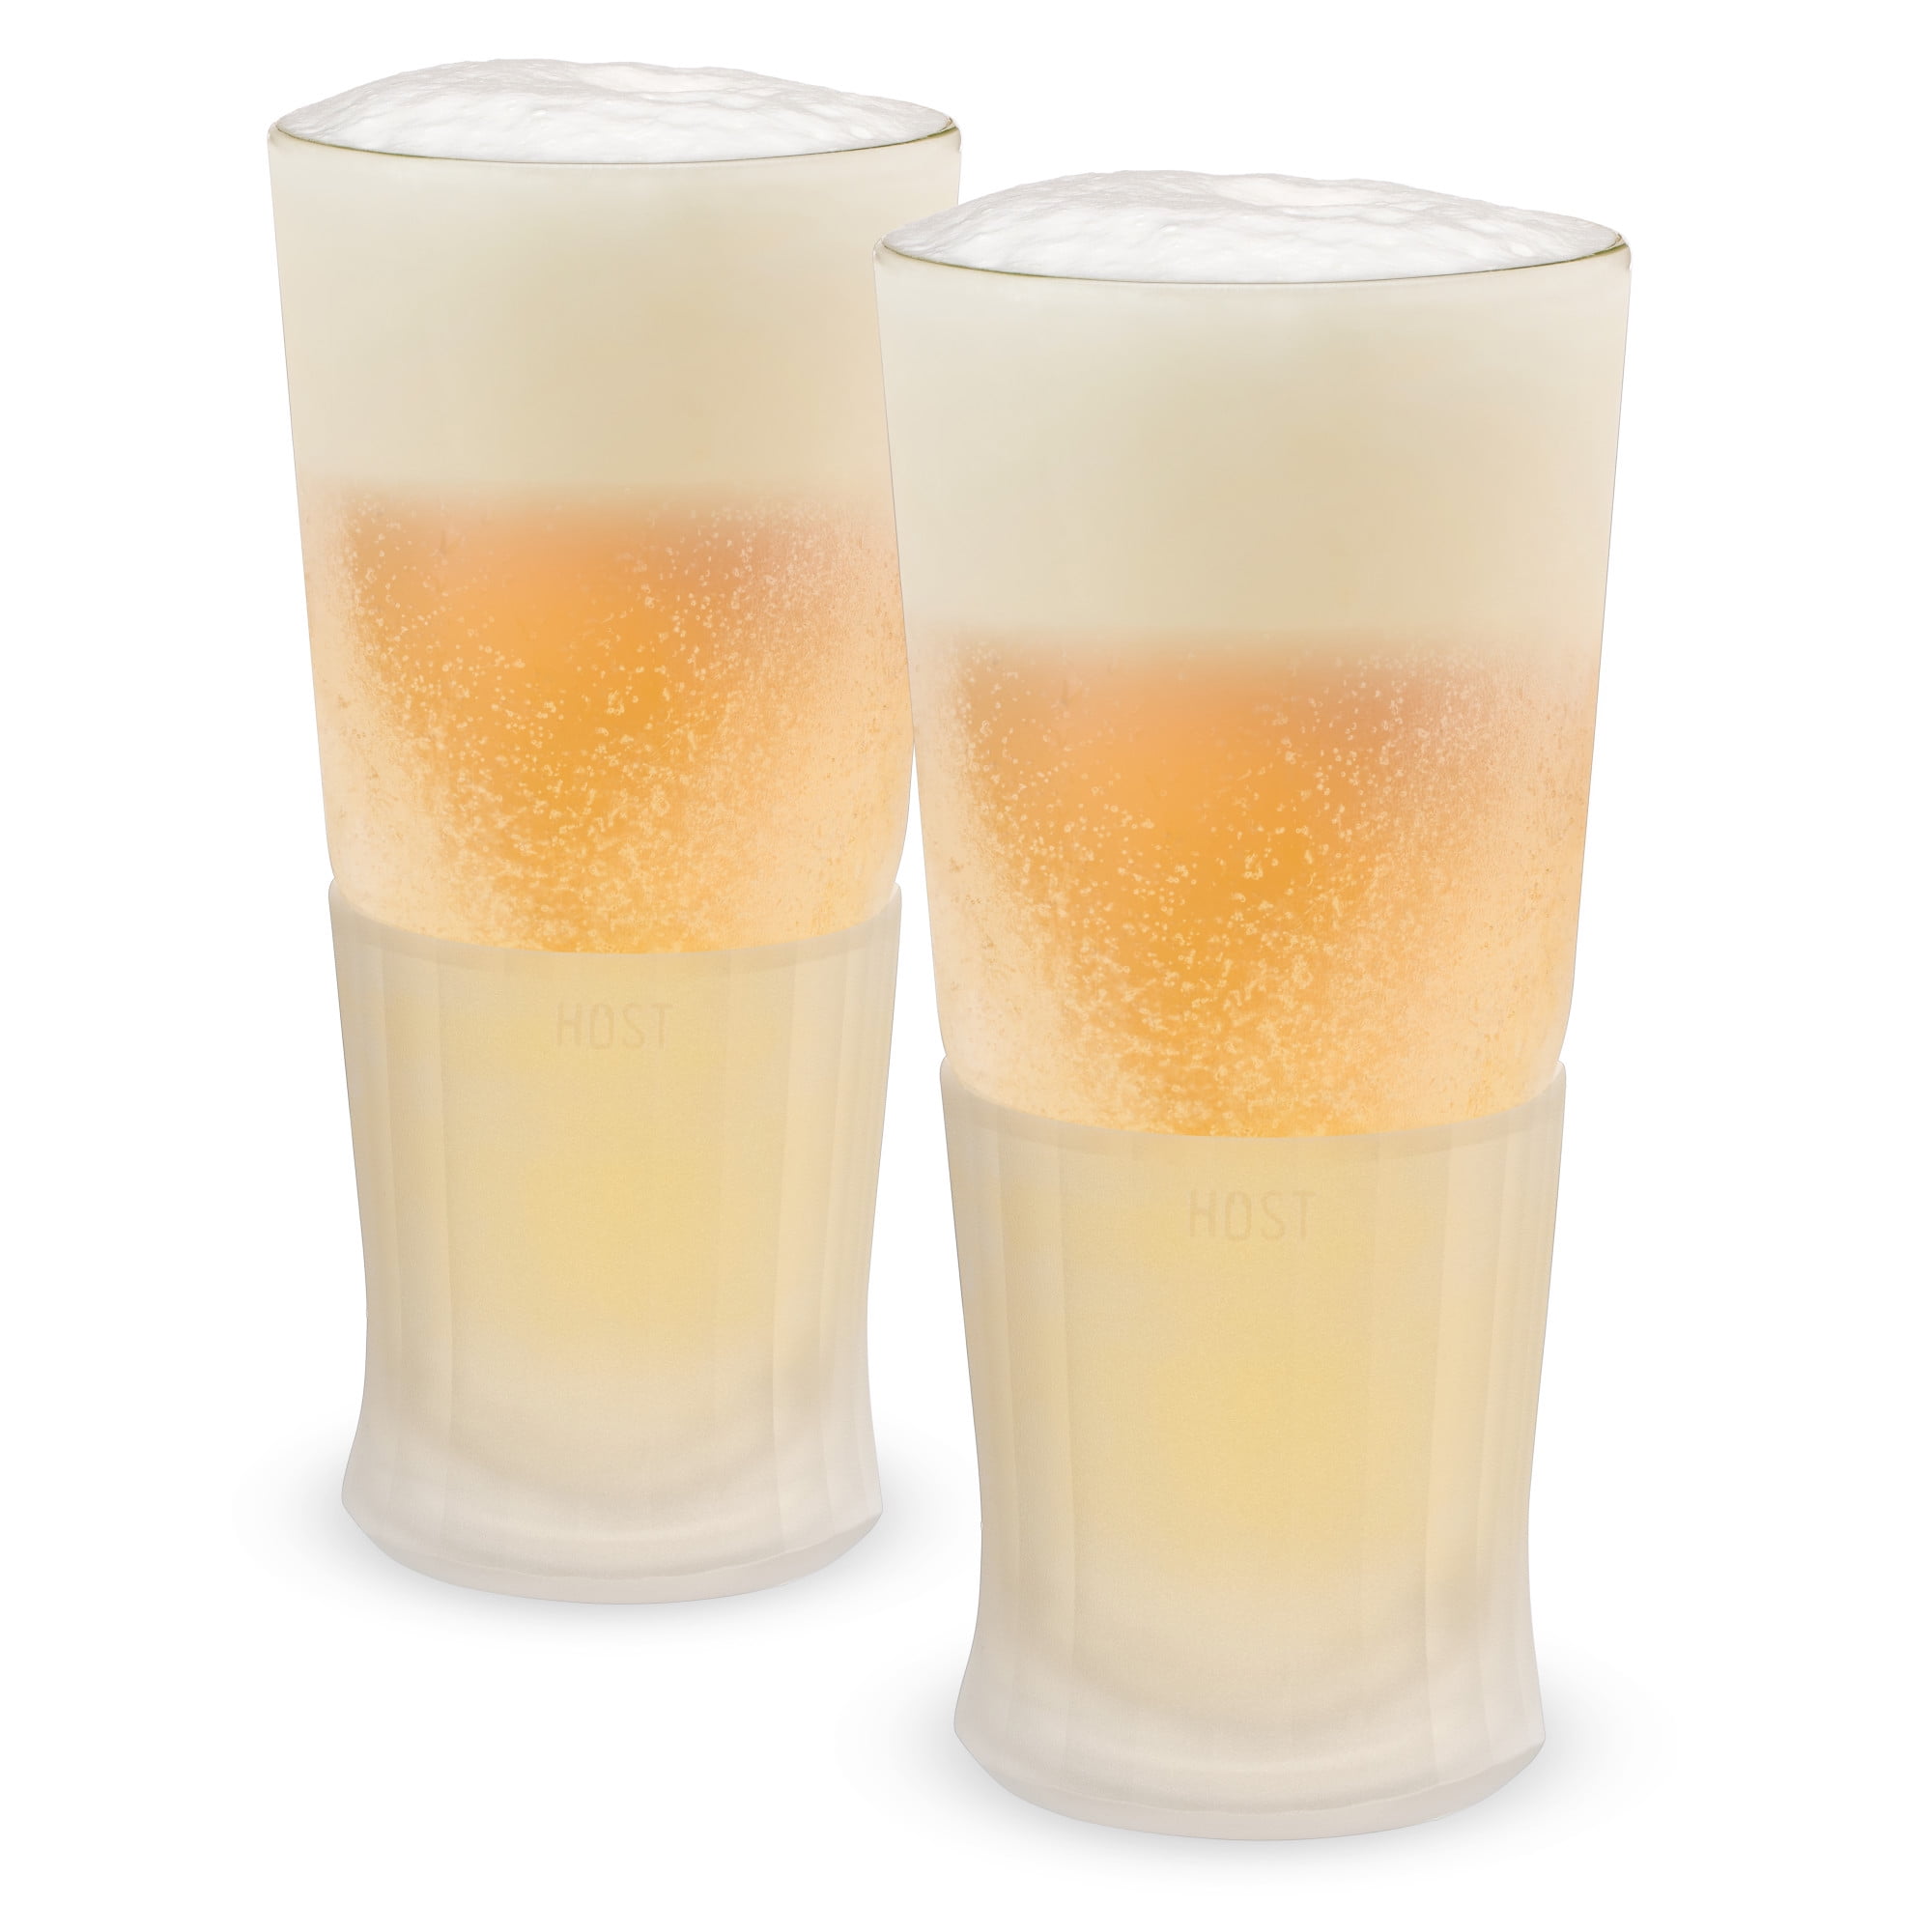 Host Freeze Beer Freezer Gel Chiller Double Wall Frozen Pint Set of 2, 16  oz, White Glass 2-Pack